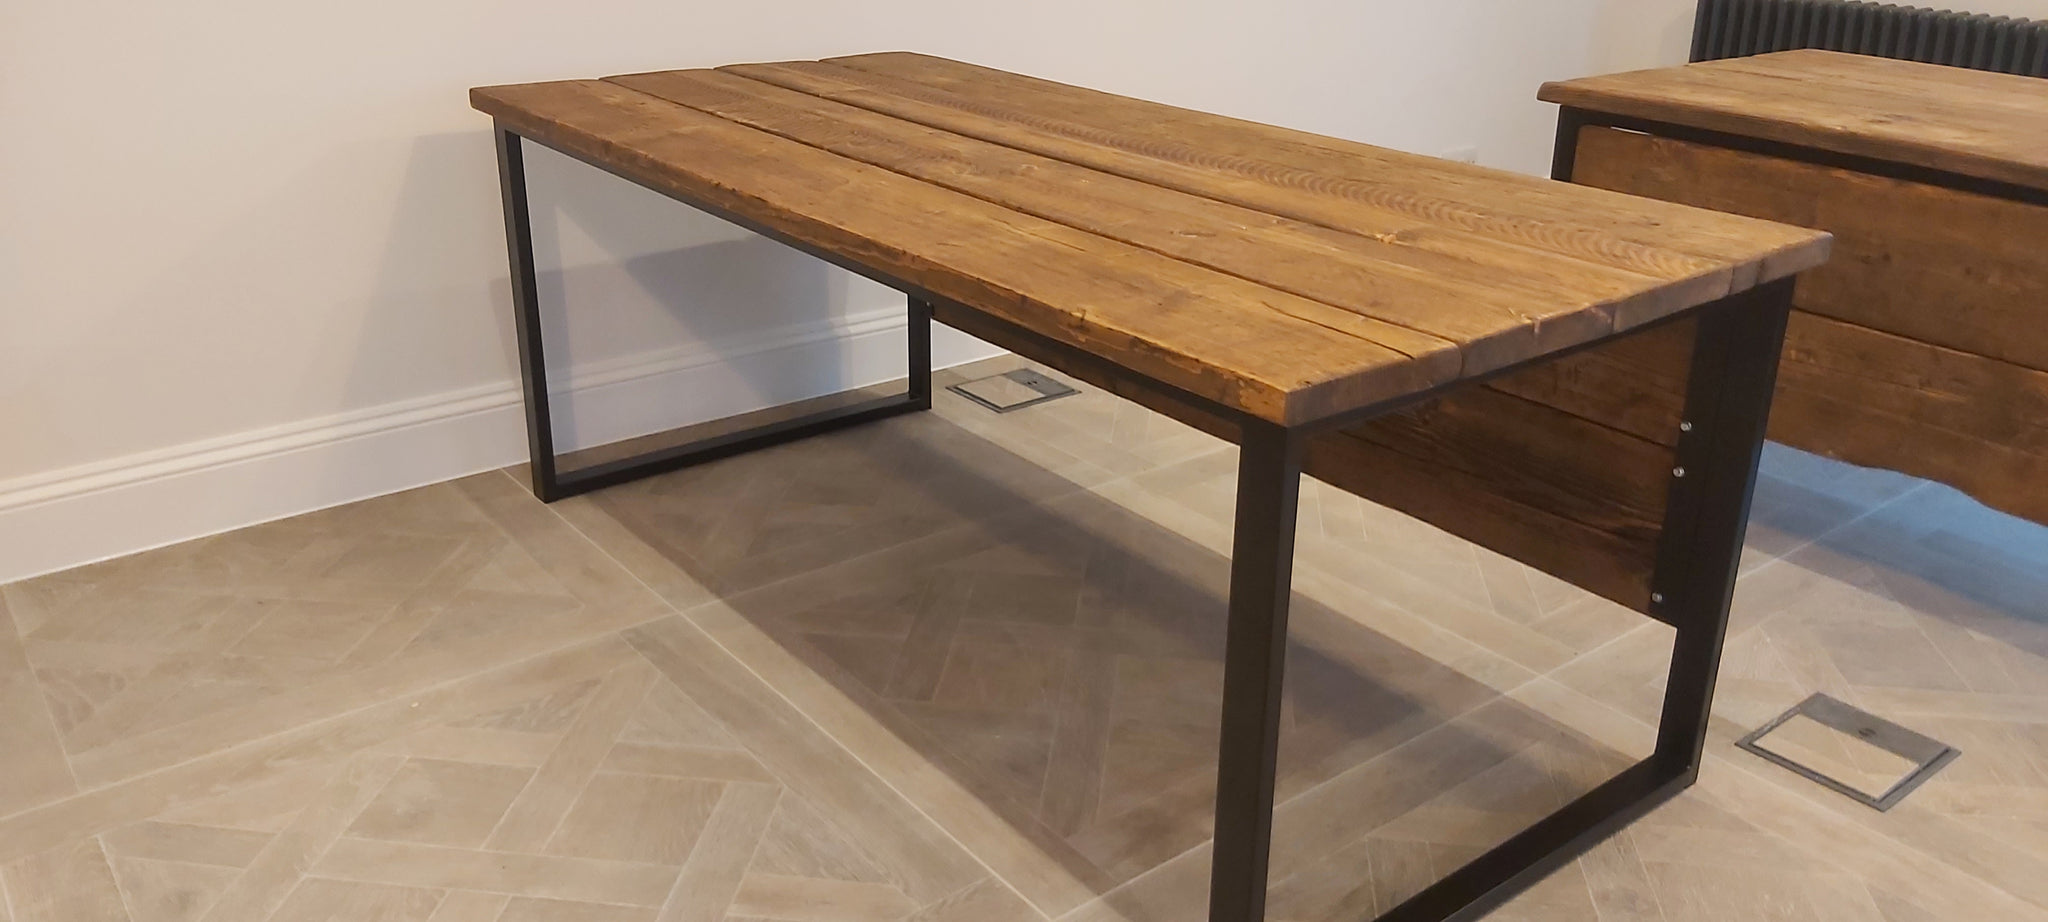 Buy Rustic Desk With A Frame Legs WFH Industrial Desk Scaffold Boards  Reclaimed Wood Home Office Steel Legs Office Desk Wood Desk Online in India  